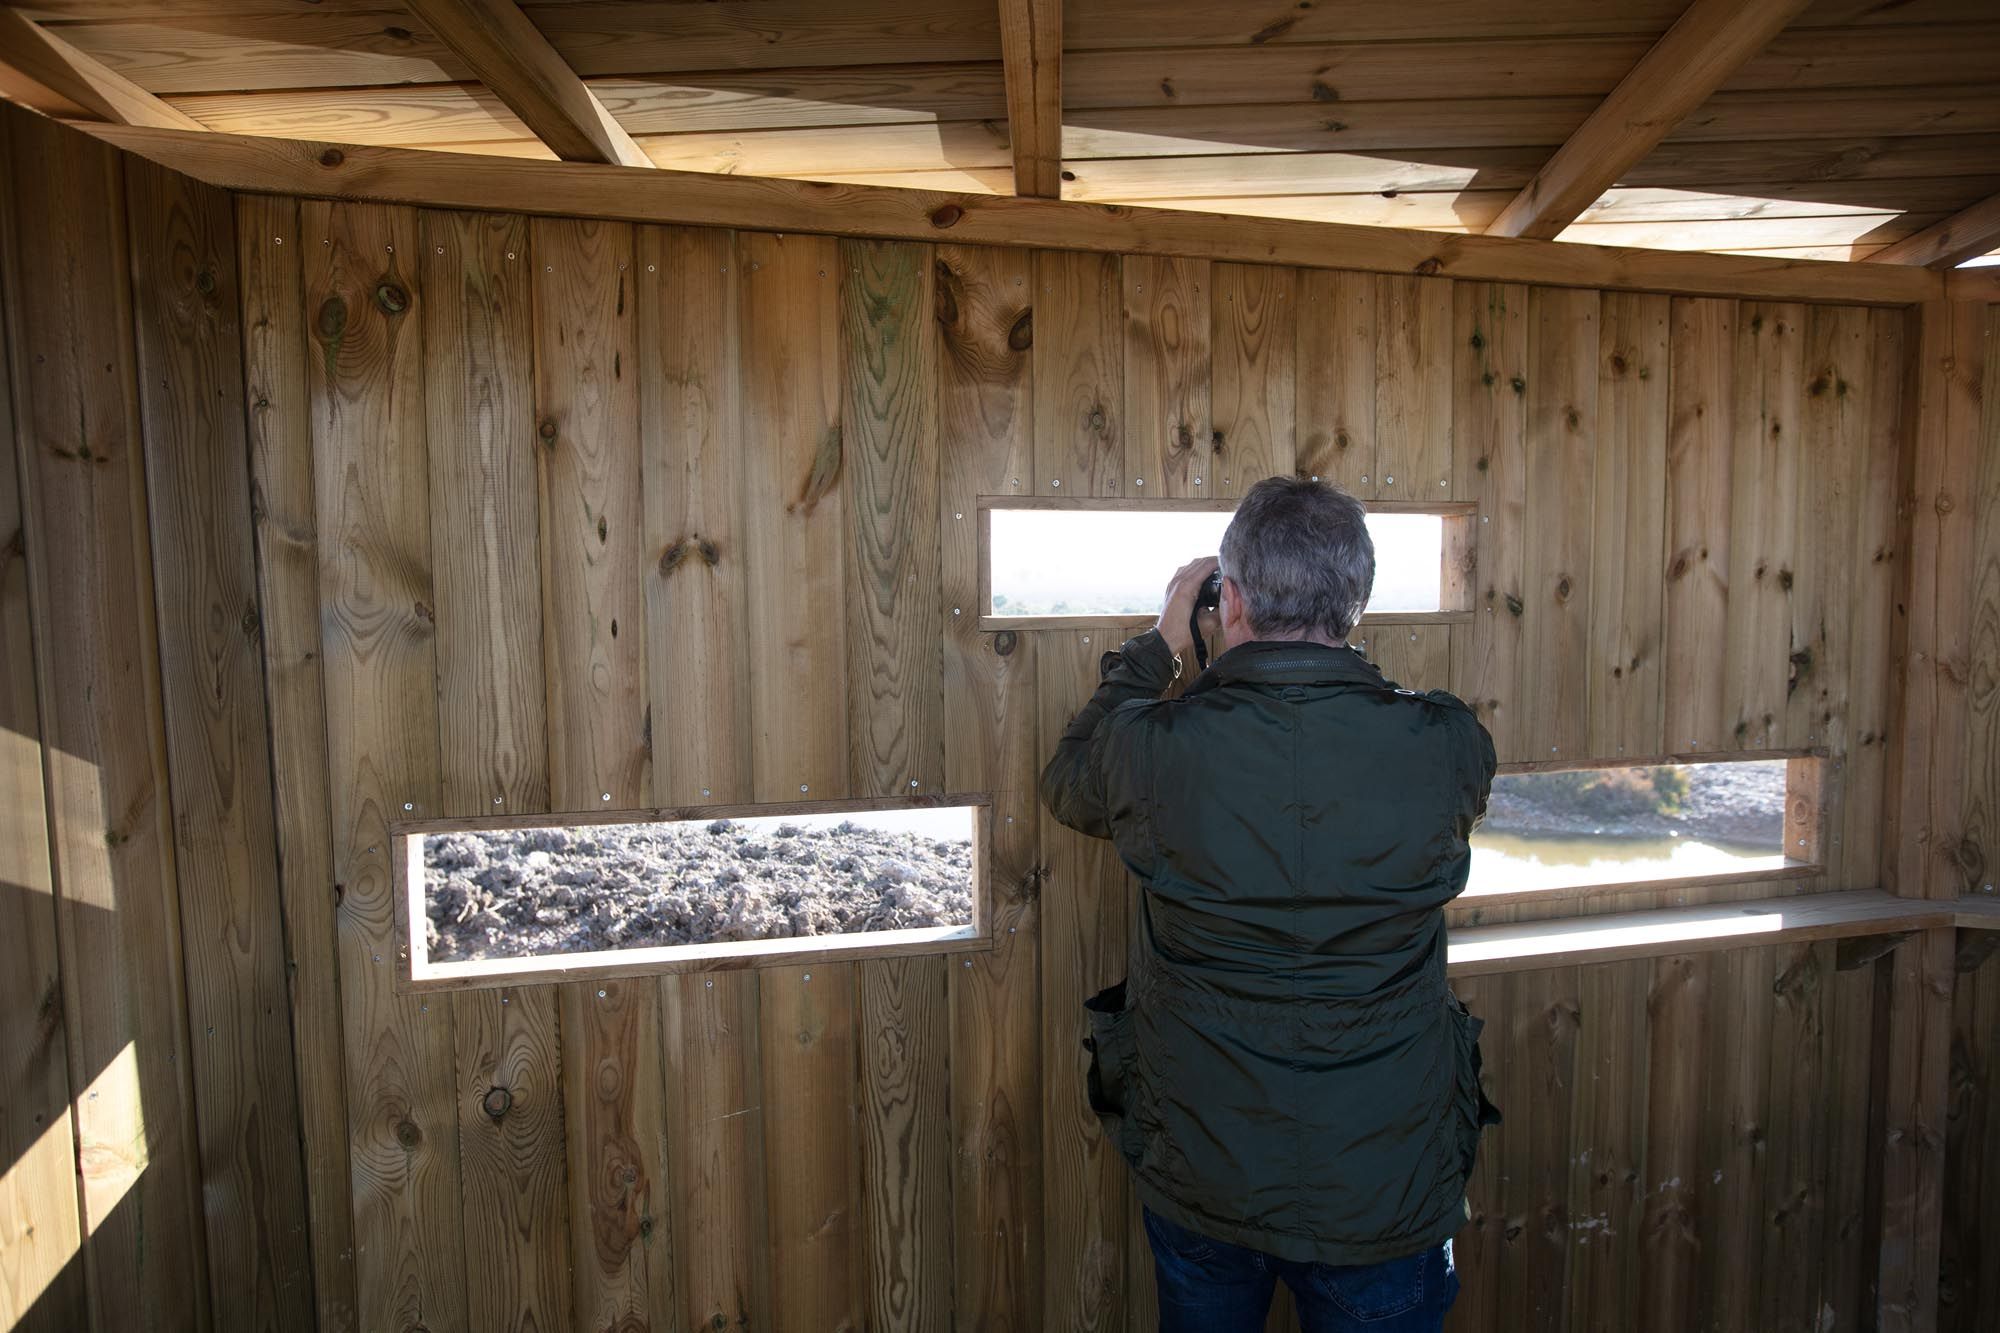 Instalado el primer observador de aves del municipio de Ibiza